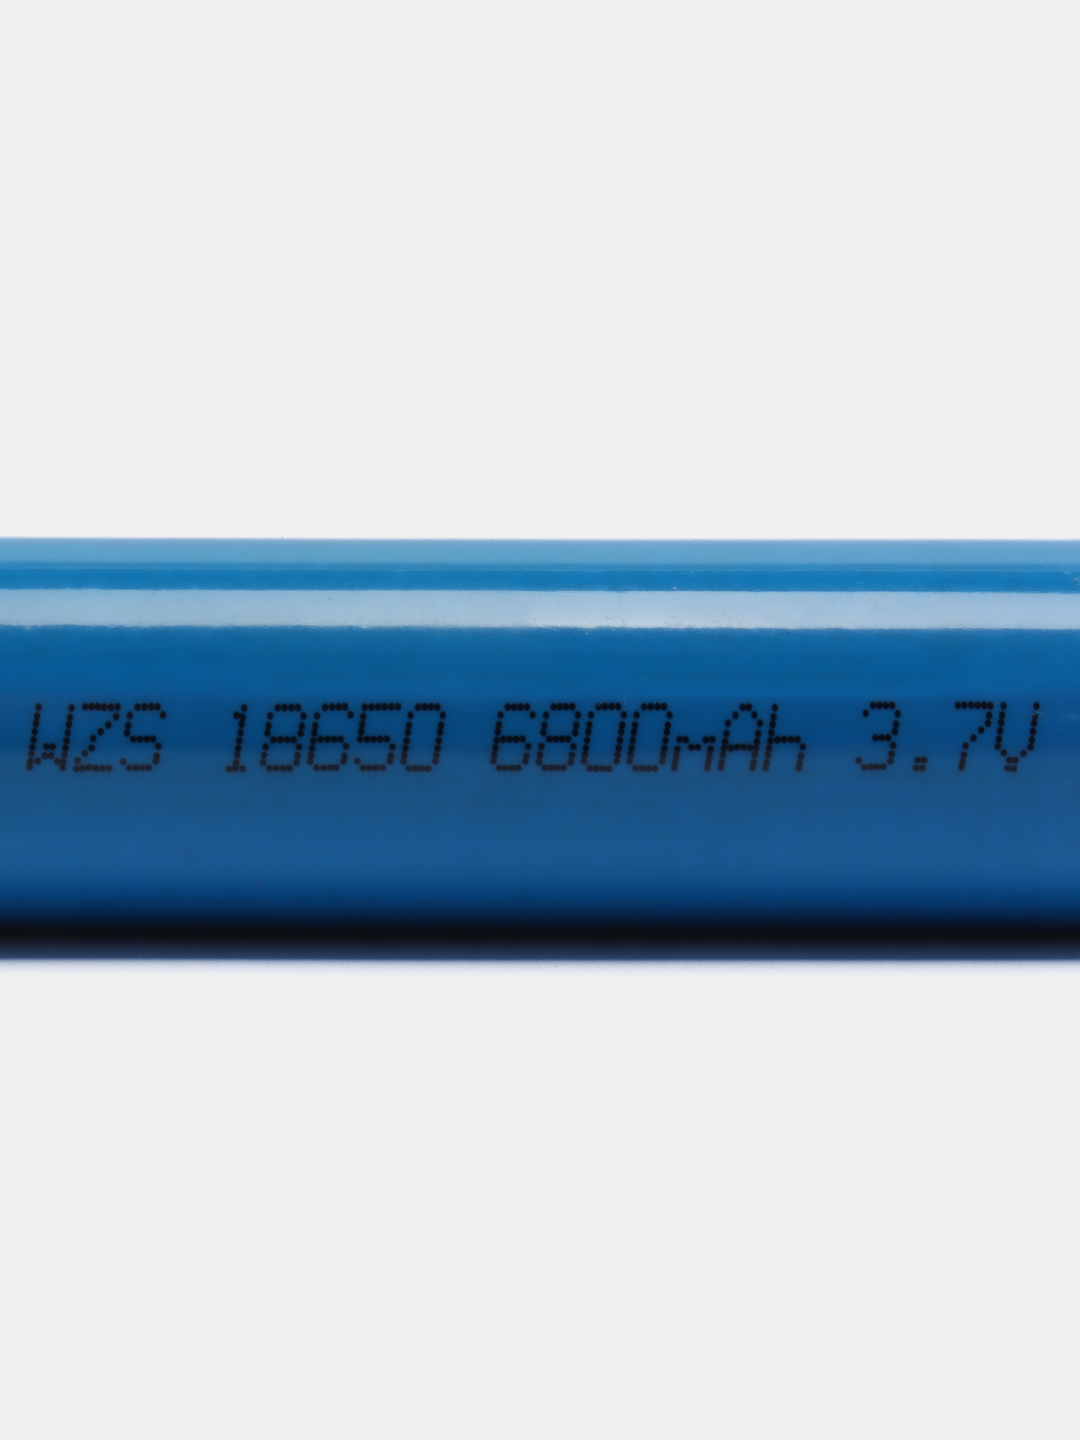 Аккумулятор 18650 для фонарика, литиевая батарейка, 6800 mAh акб для .